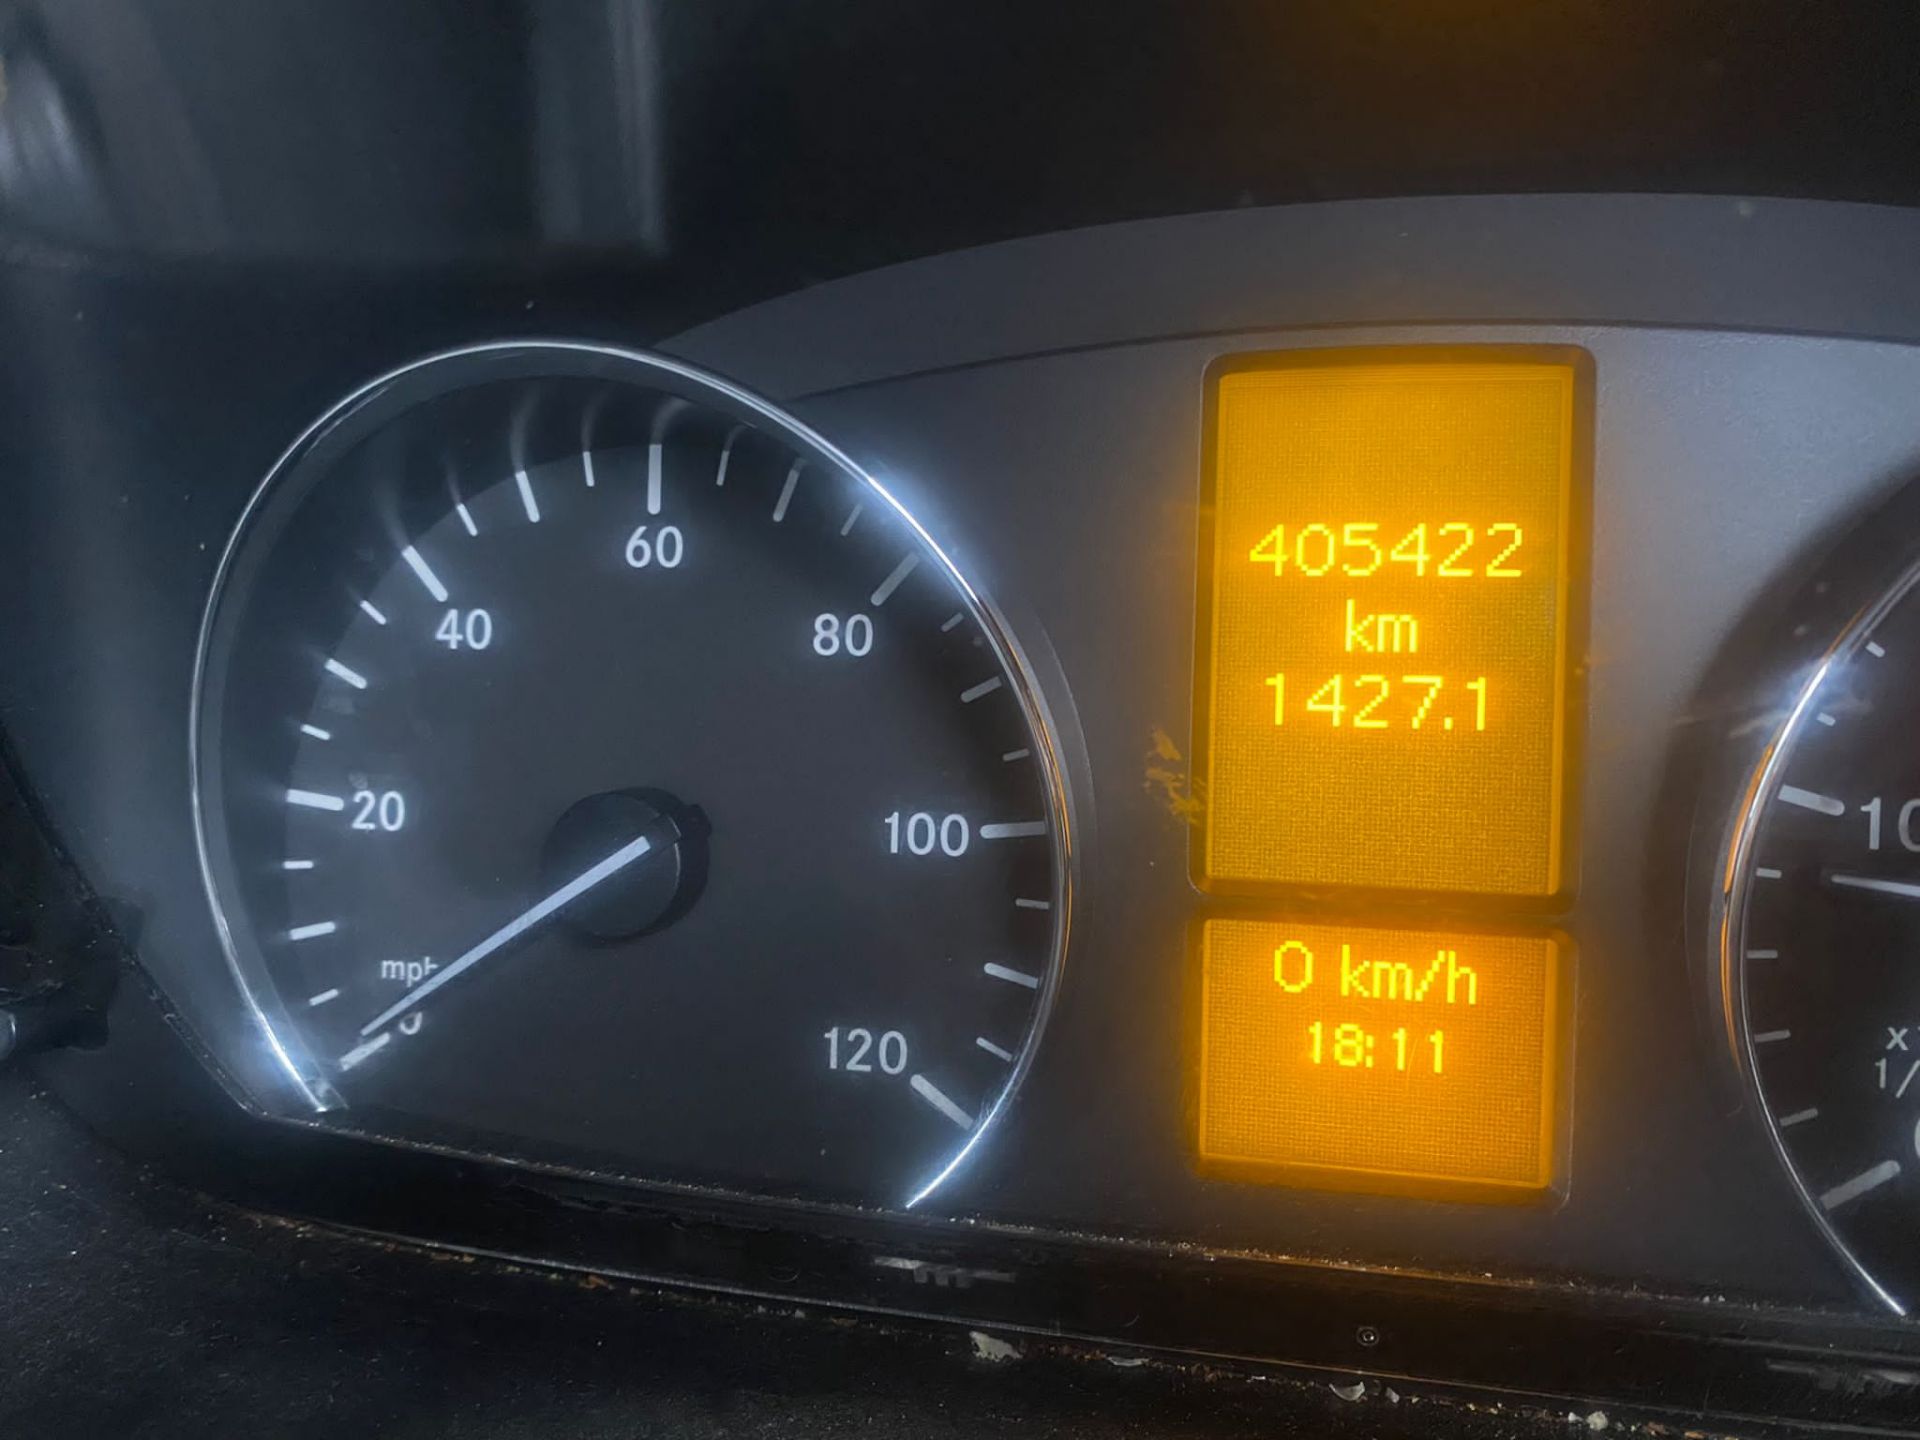 2014 Mercedes sprinter fridge van - Image 8 of 13